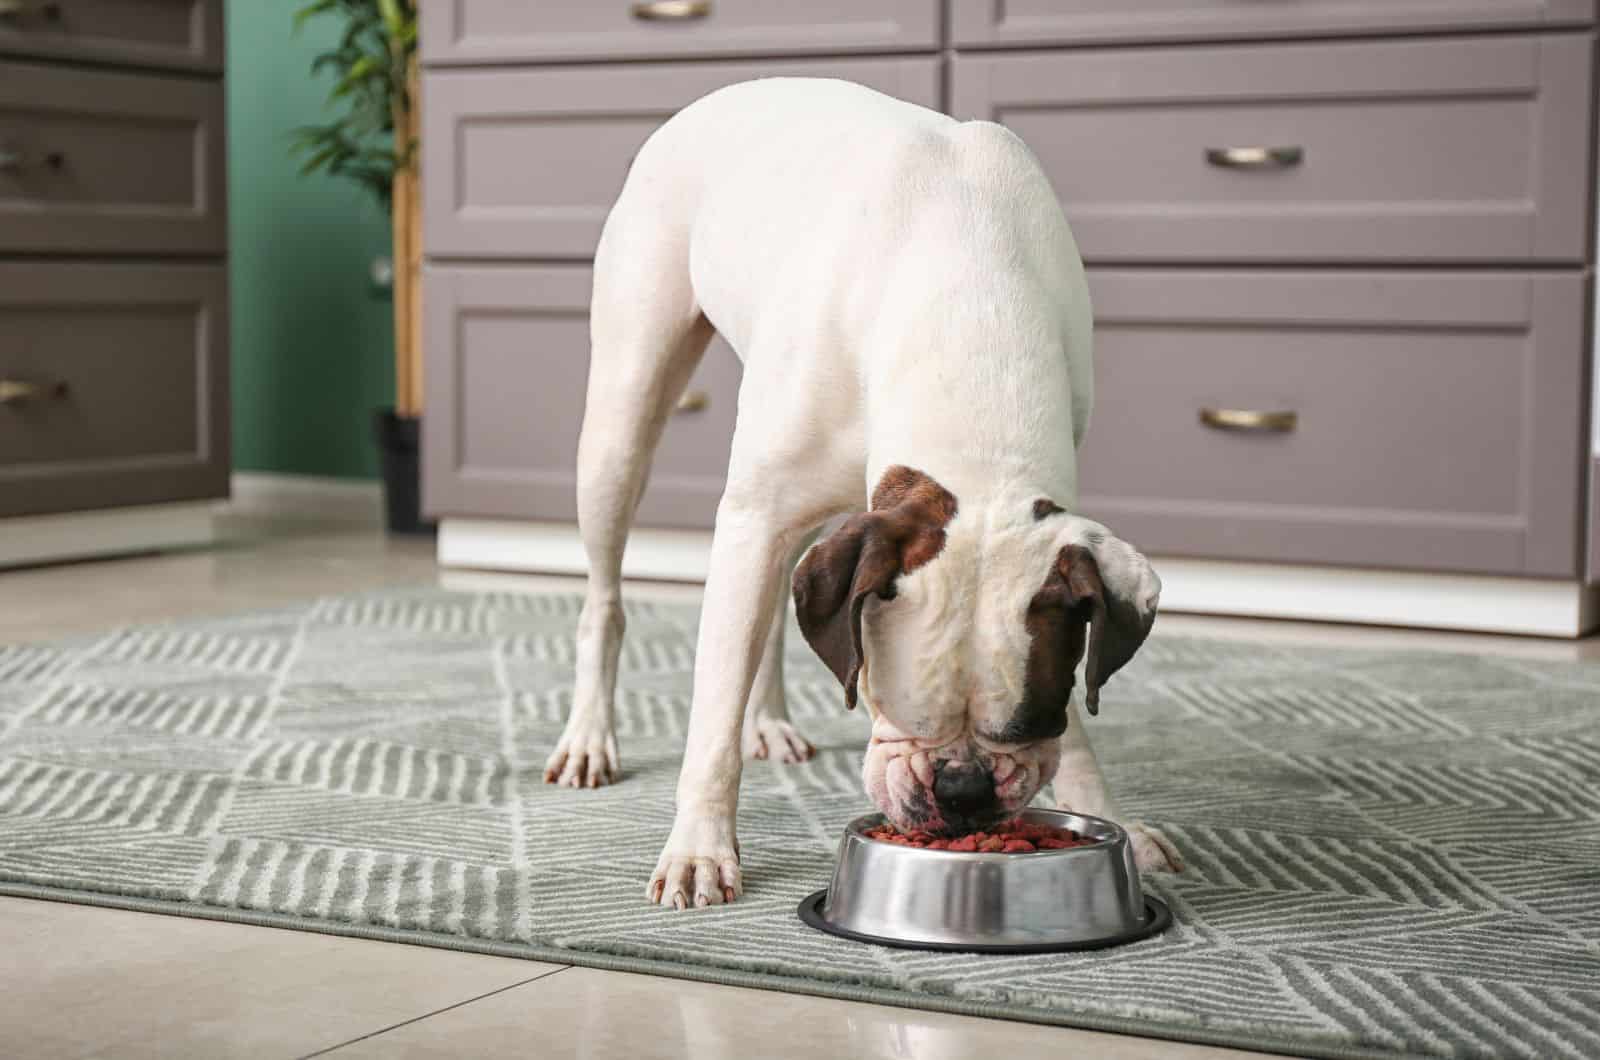 Boxer eating from bowl on carpet